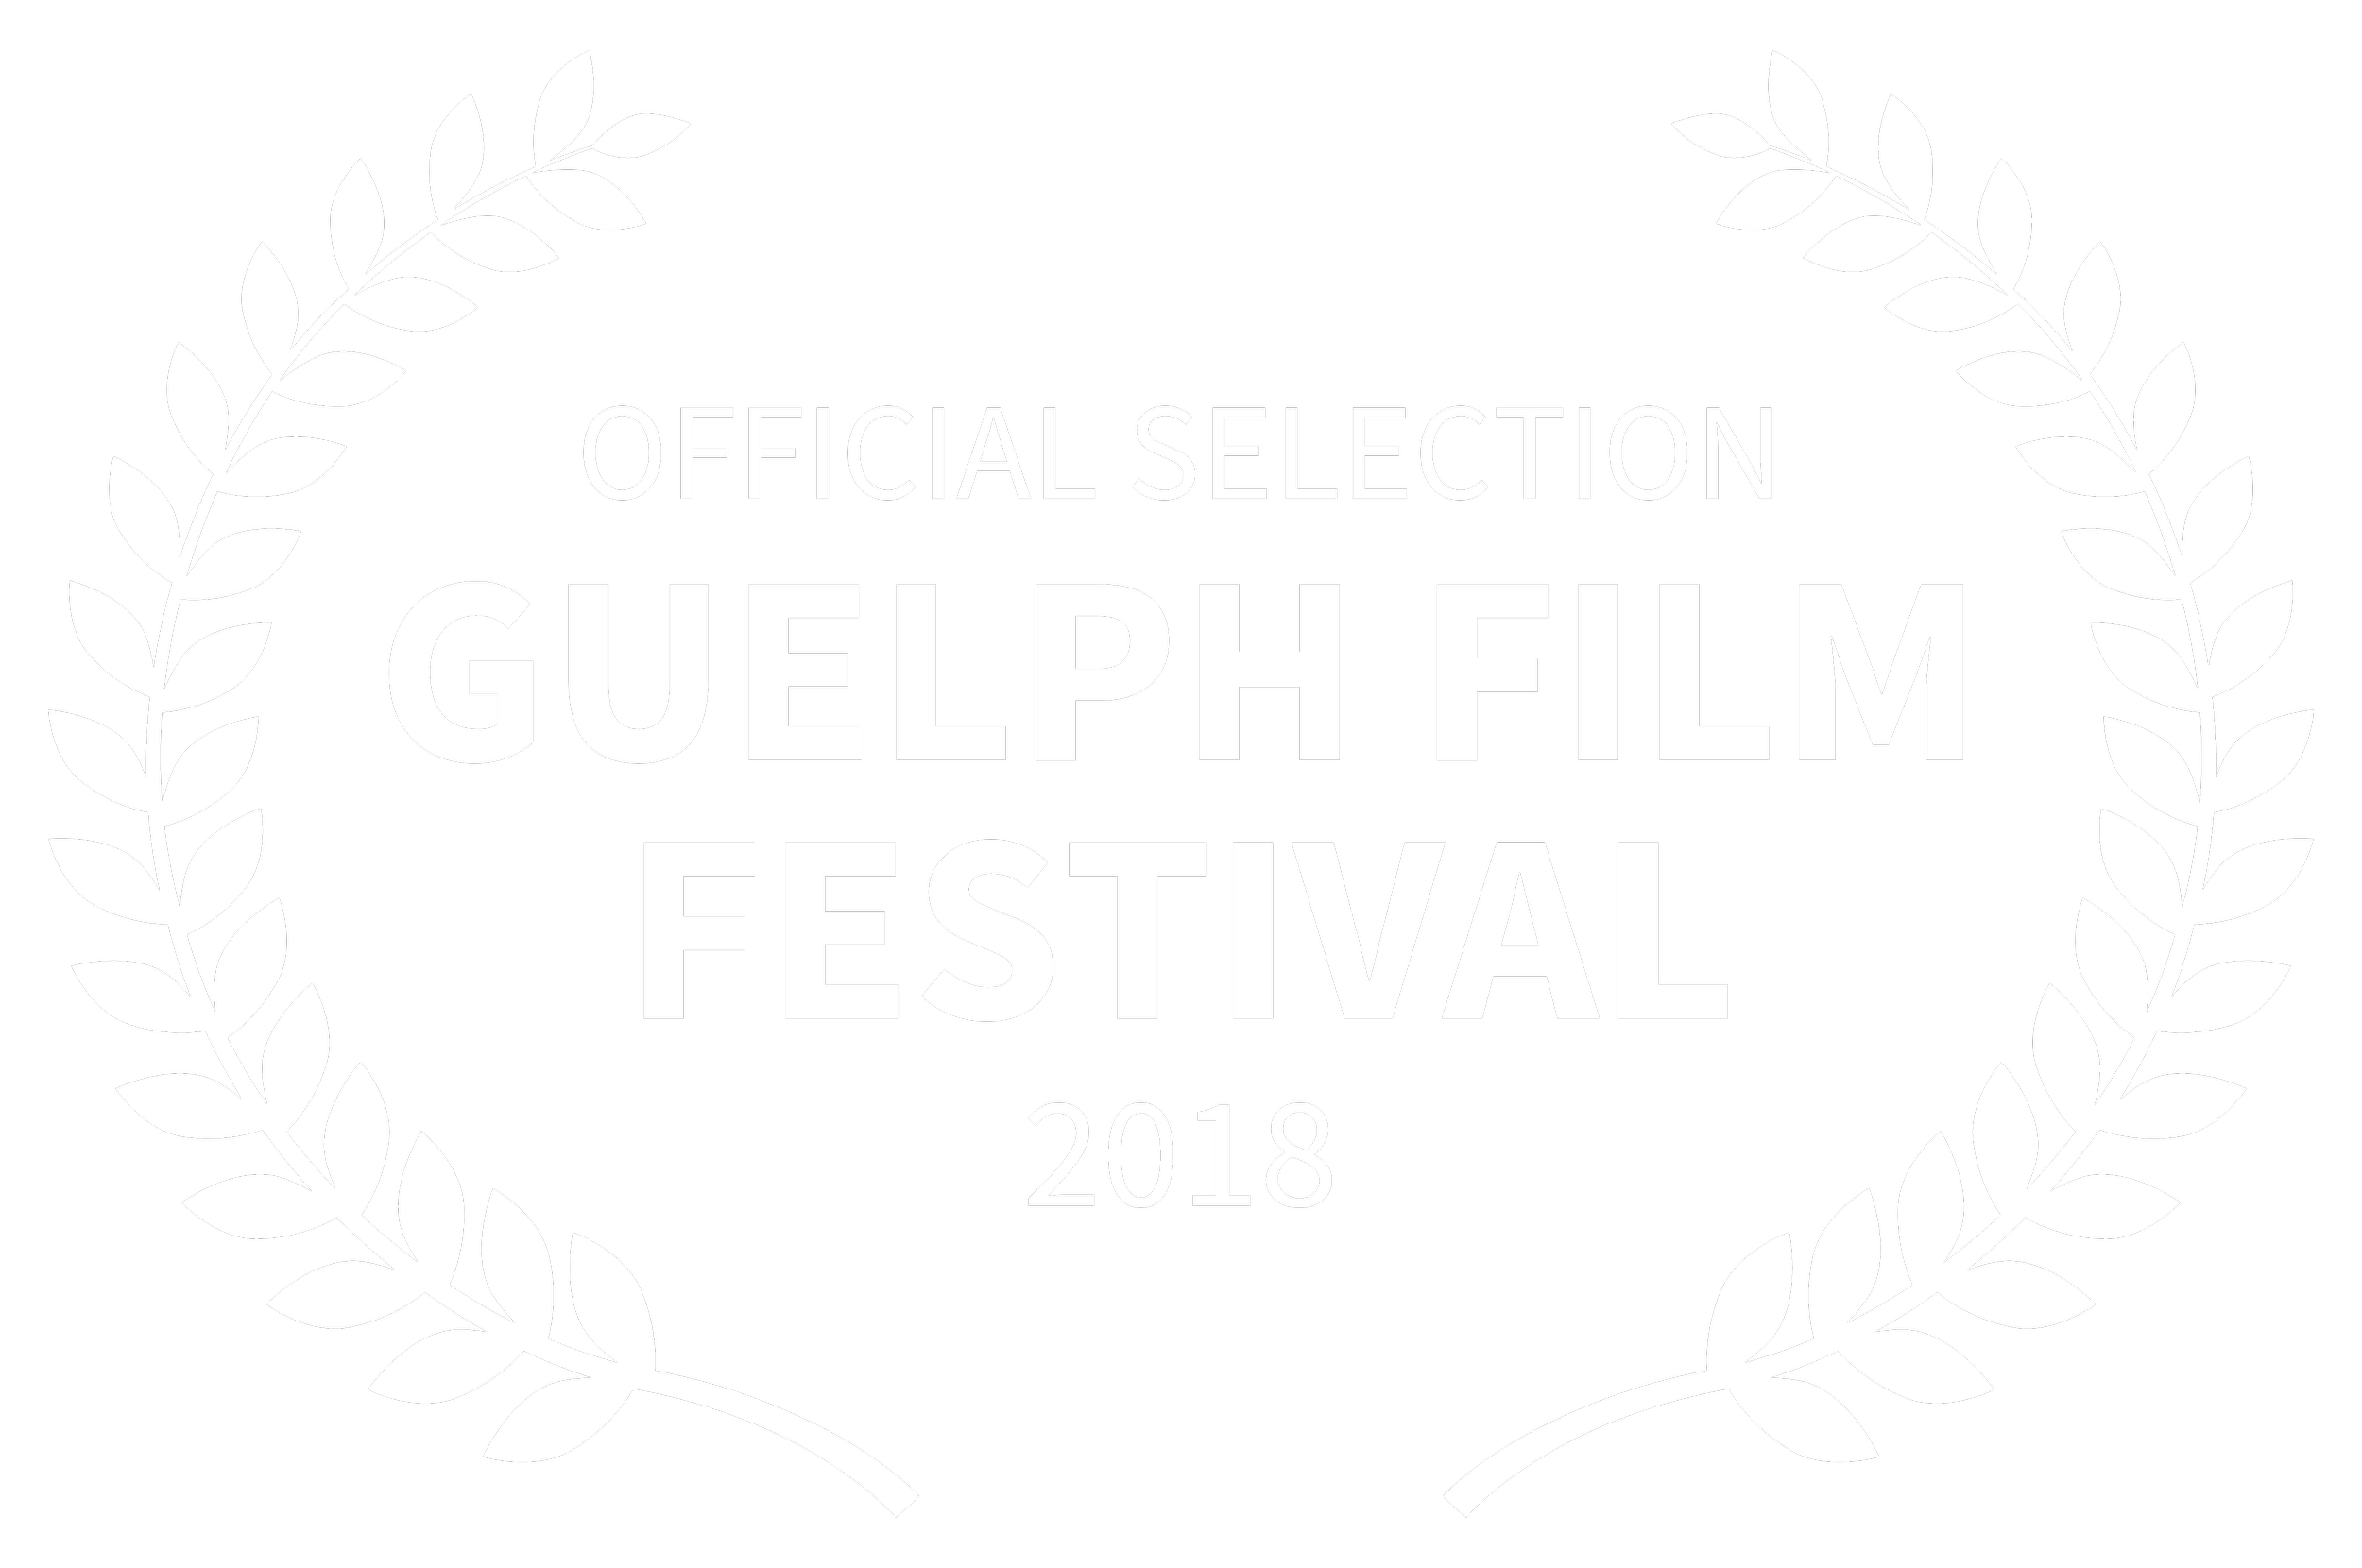 Guelph Film Festival official selection laurel